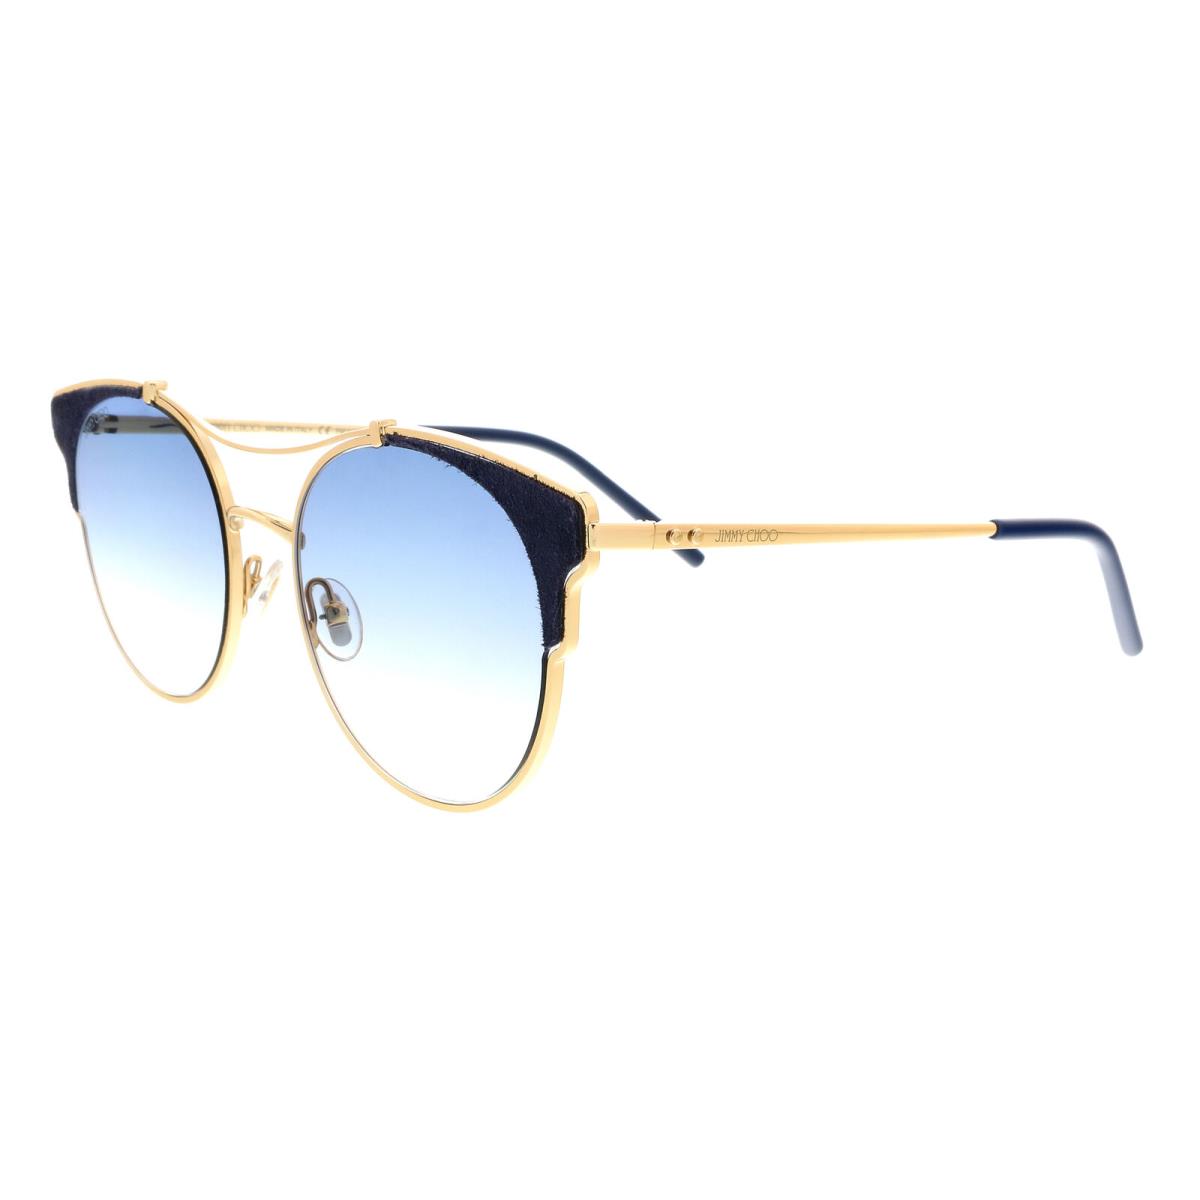 Jimmy Choo Lue/s 0LKS Gold/blue Cat Eye Sunglasses